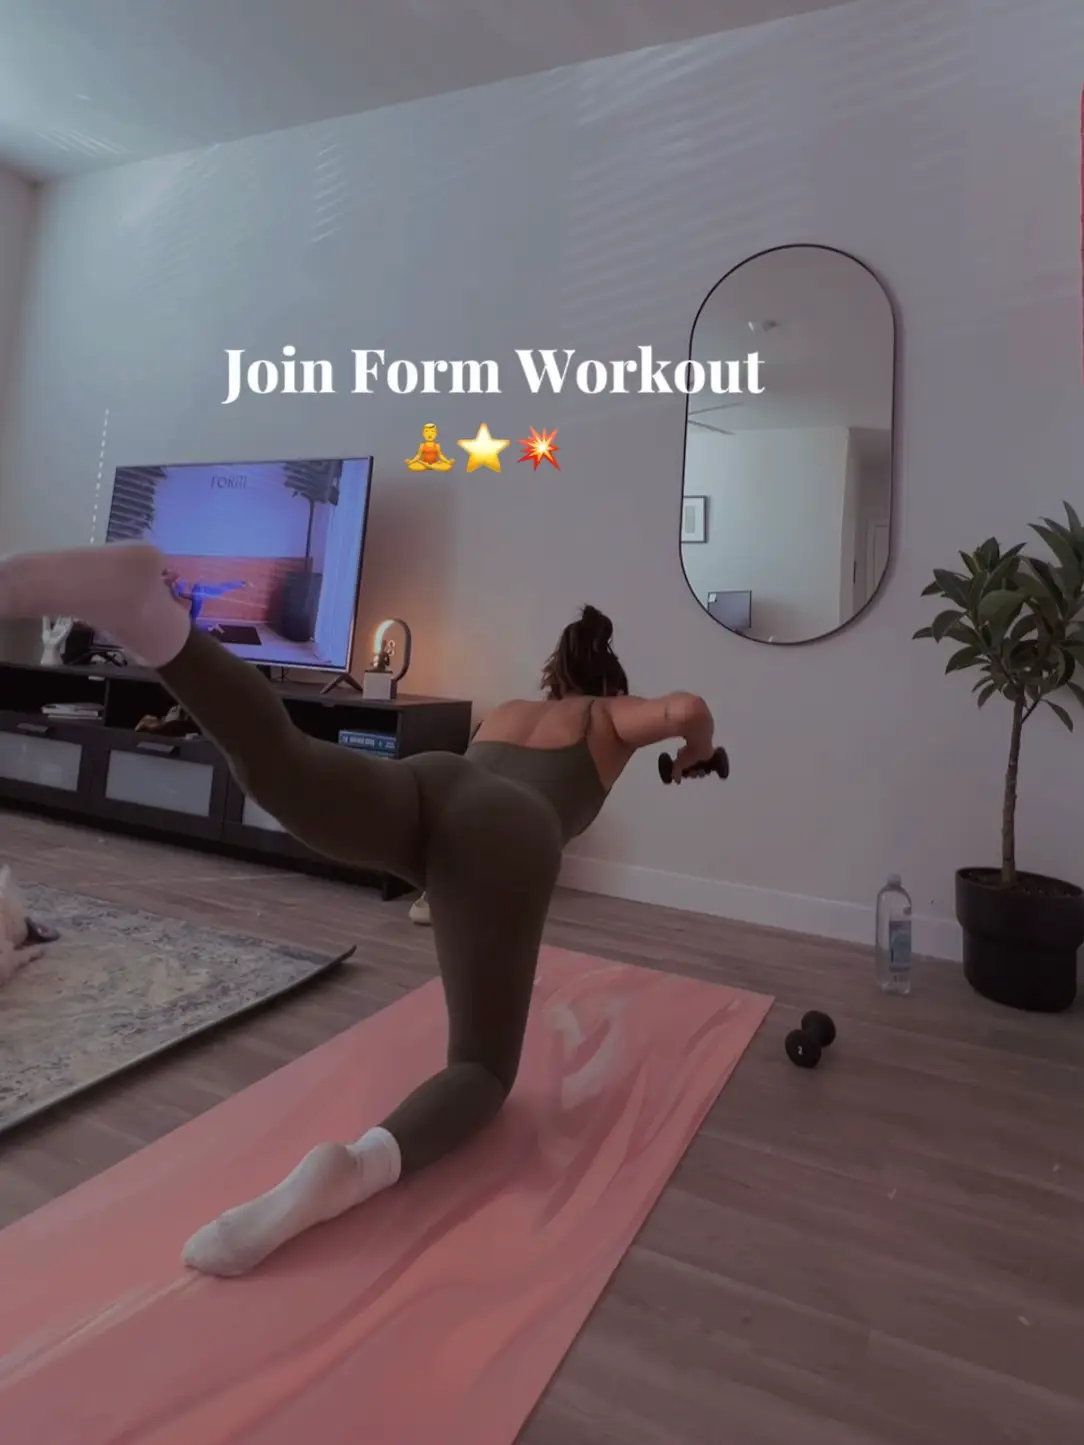 Influencer Sami Clarke's Form fitness platform sold out of its